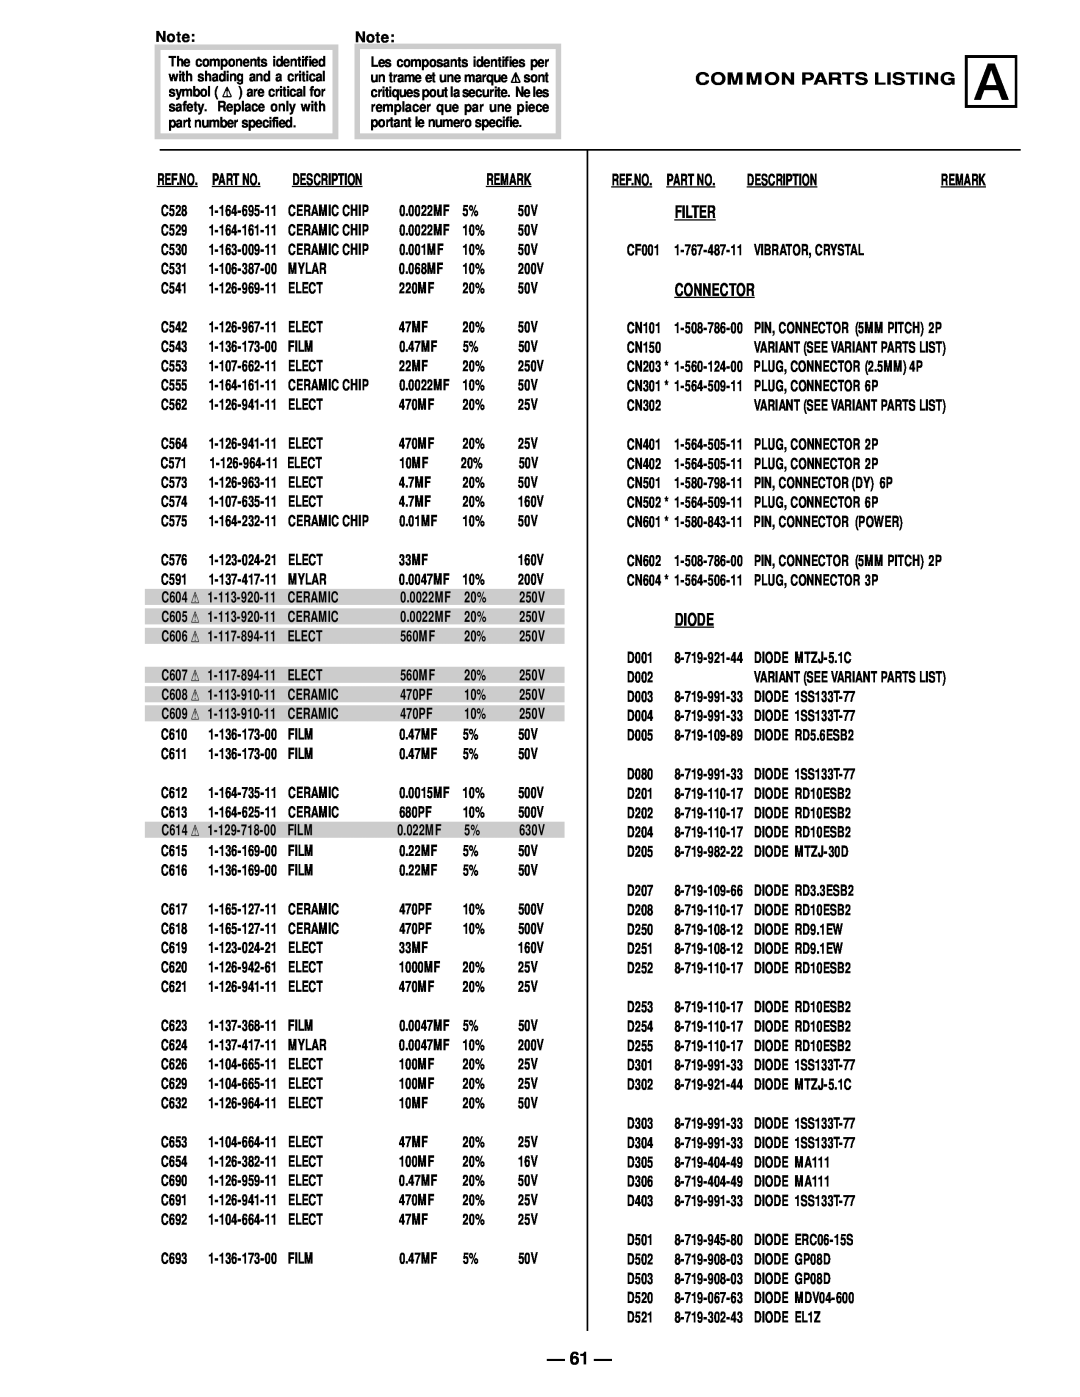 Sony KV-29SL40C Common Parts Listing A, Filter, Connector, Diode, Description, Remark, CN203, CN301, CN502, CN601, CN604 